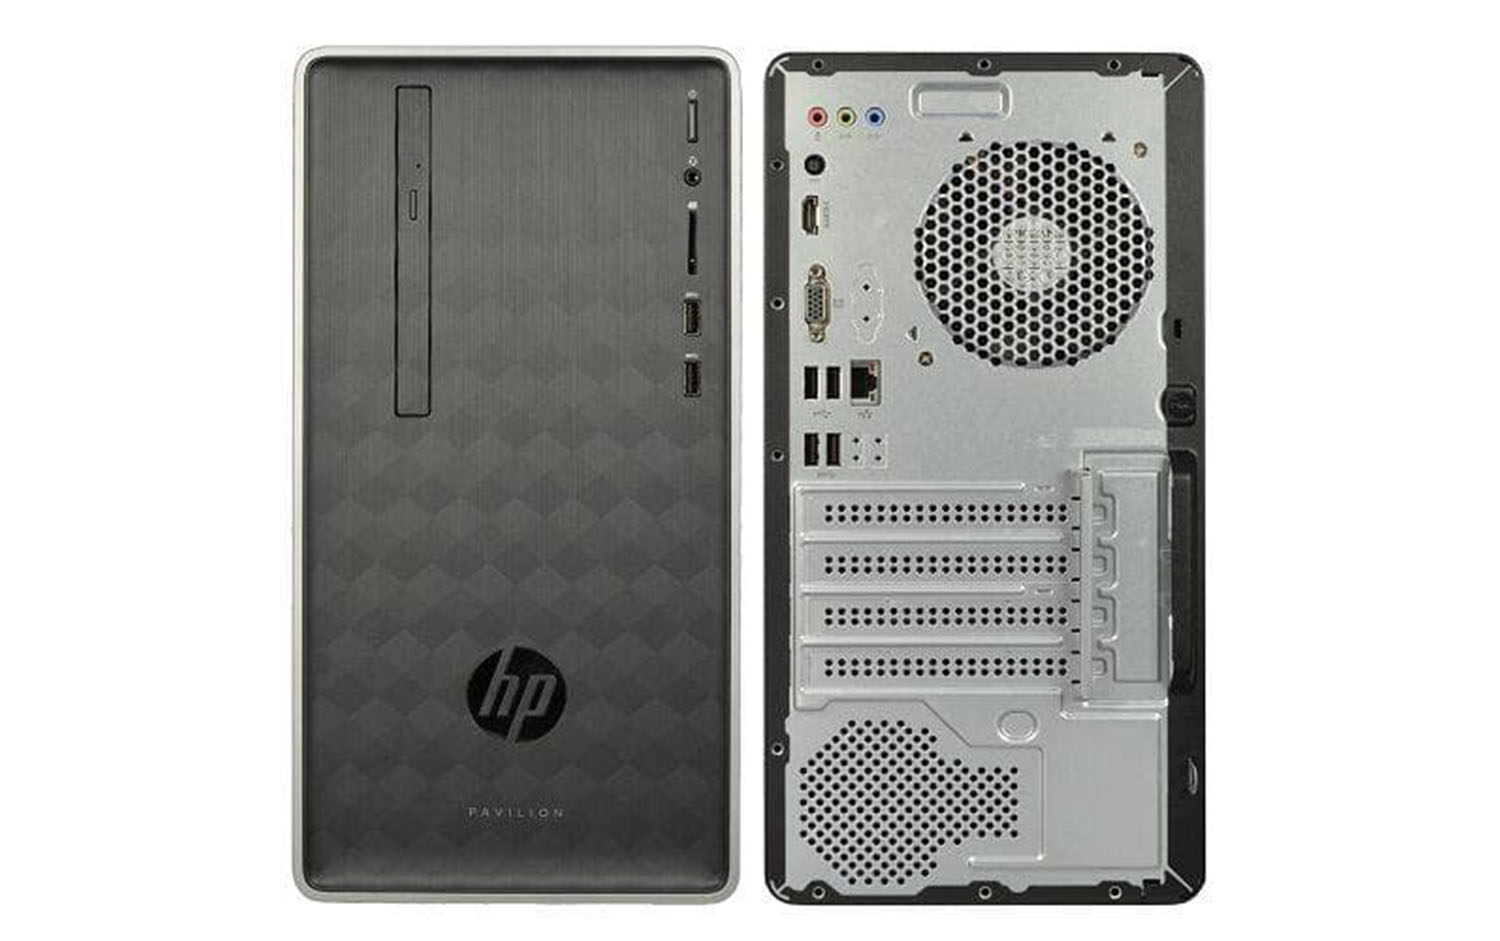 HP Pavilion Desktop 590-P0069 AMD A10-9700 8GB RAM 2TB HDD Windows 10 Home